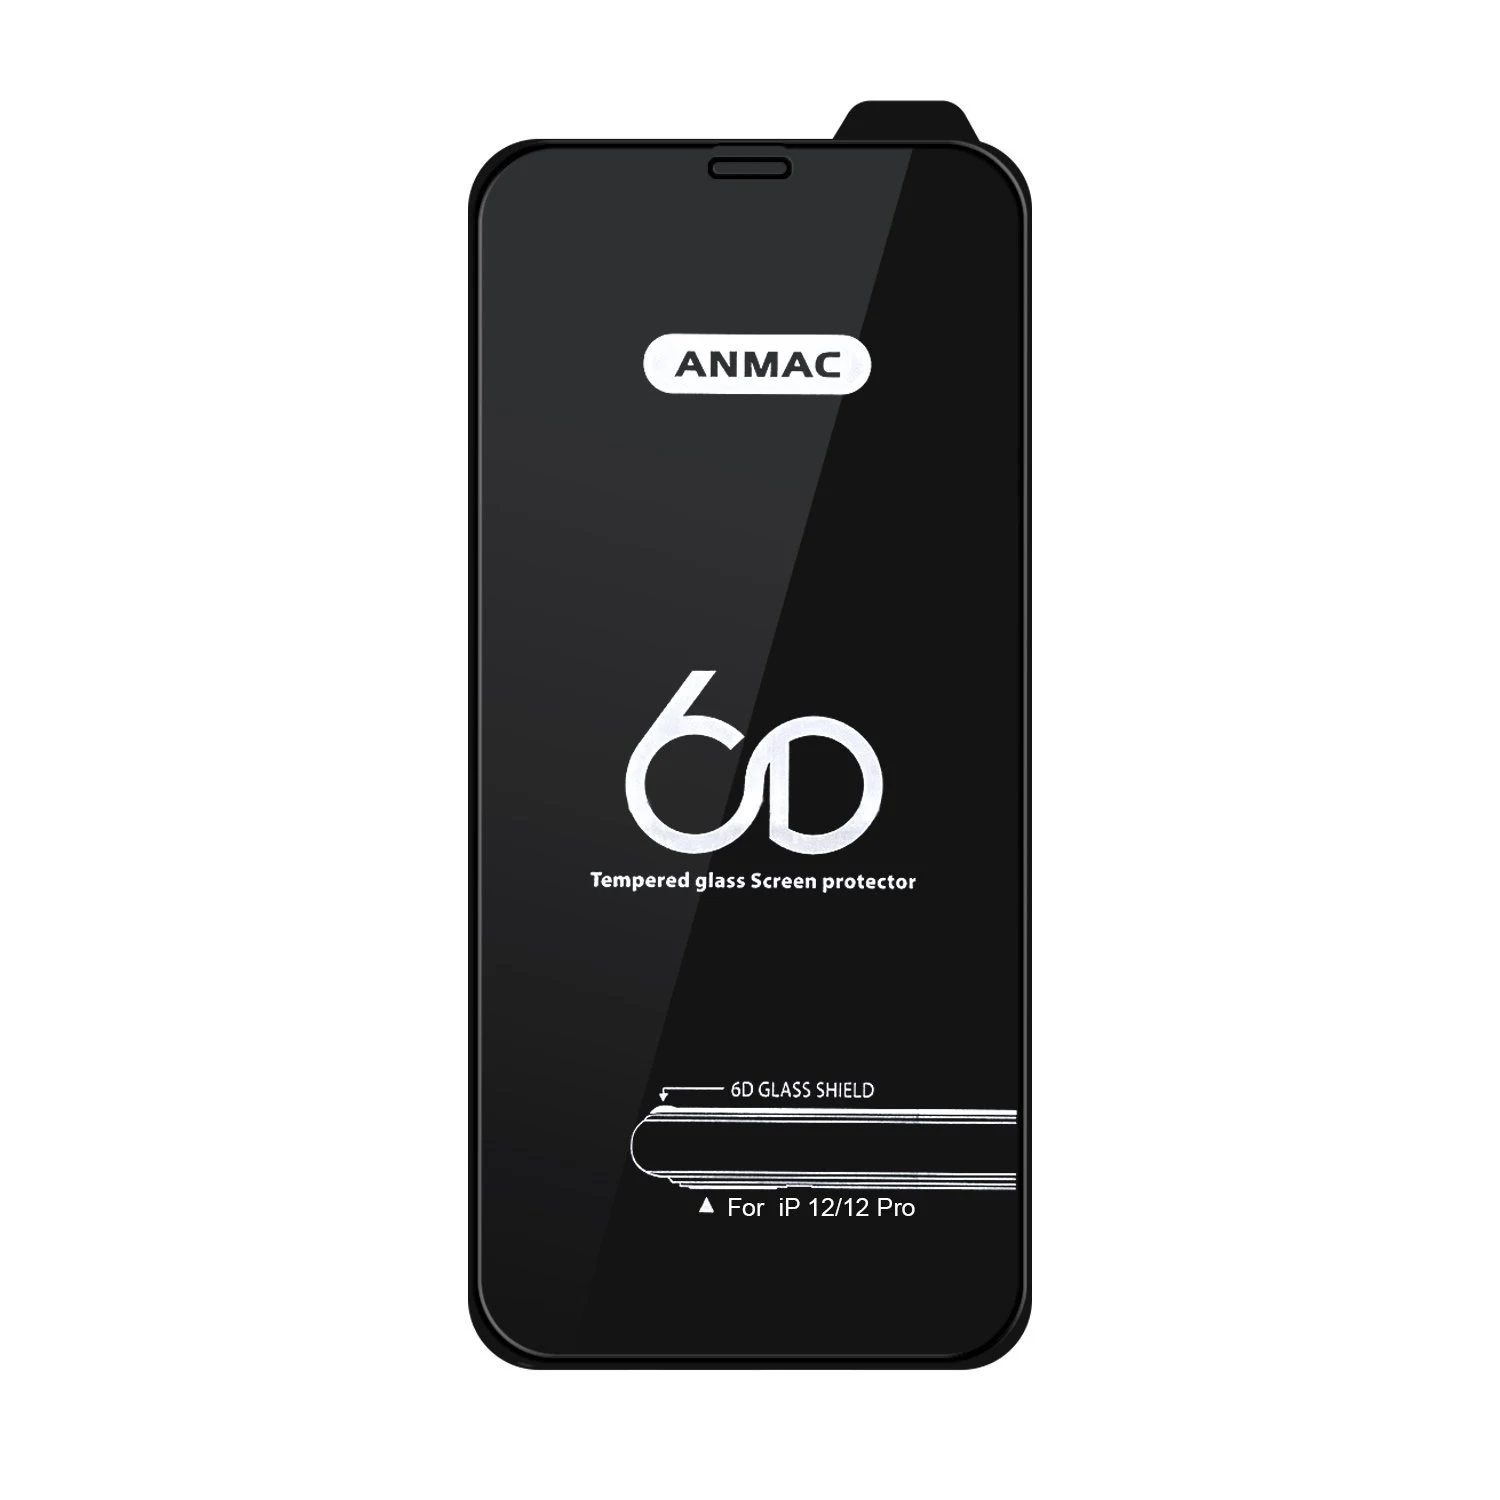 Защитное стекло ANMAC для iPhone 12/12 Pro, 6D, тп